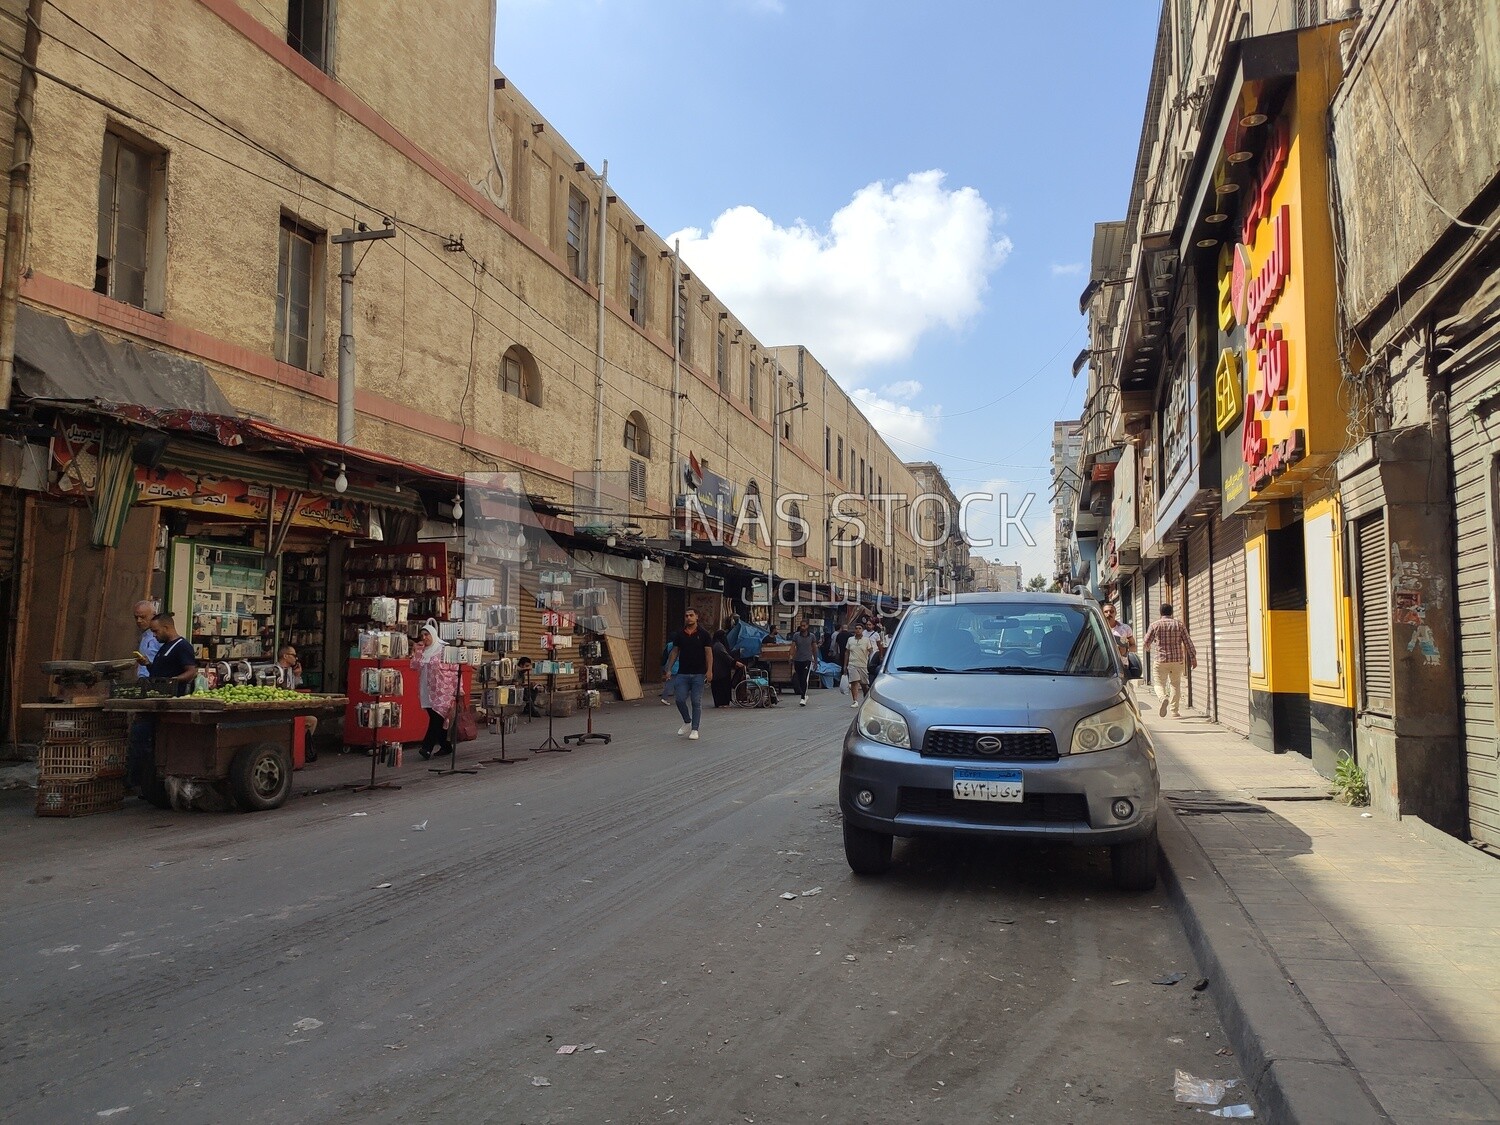 One of the streets of Mansheya in Alexandria ,Egypt